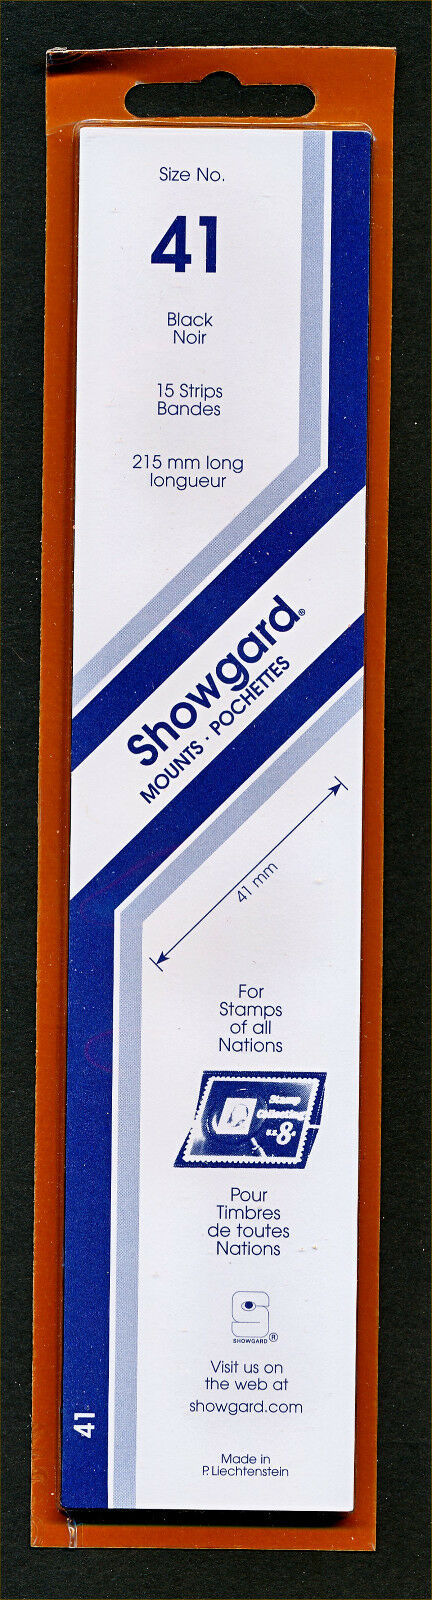 Showgard Stamp Mount Size 41/215 Mm - Black (pack Of 15) (41x215  41mm)  Strip